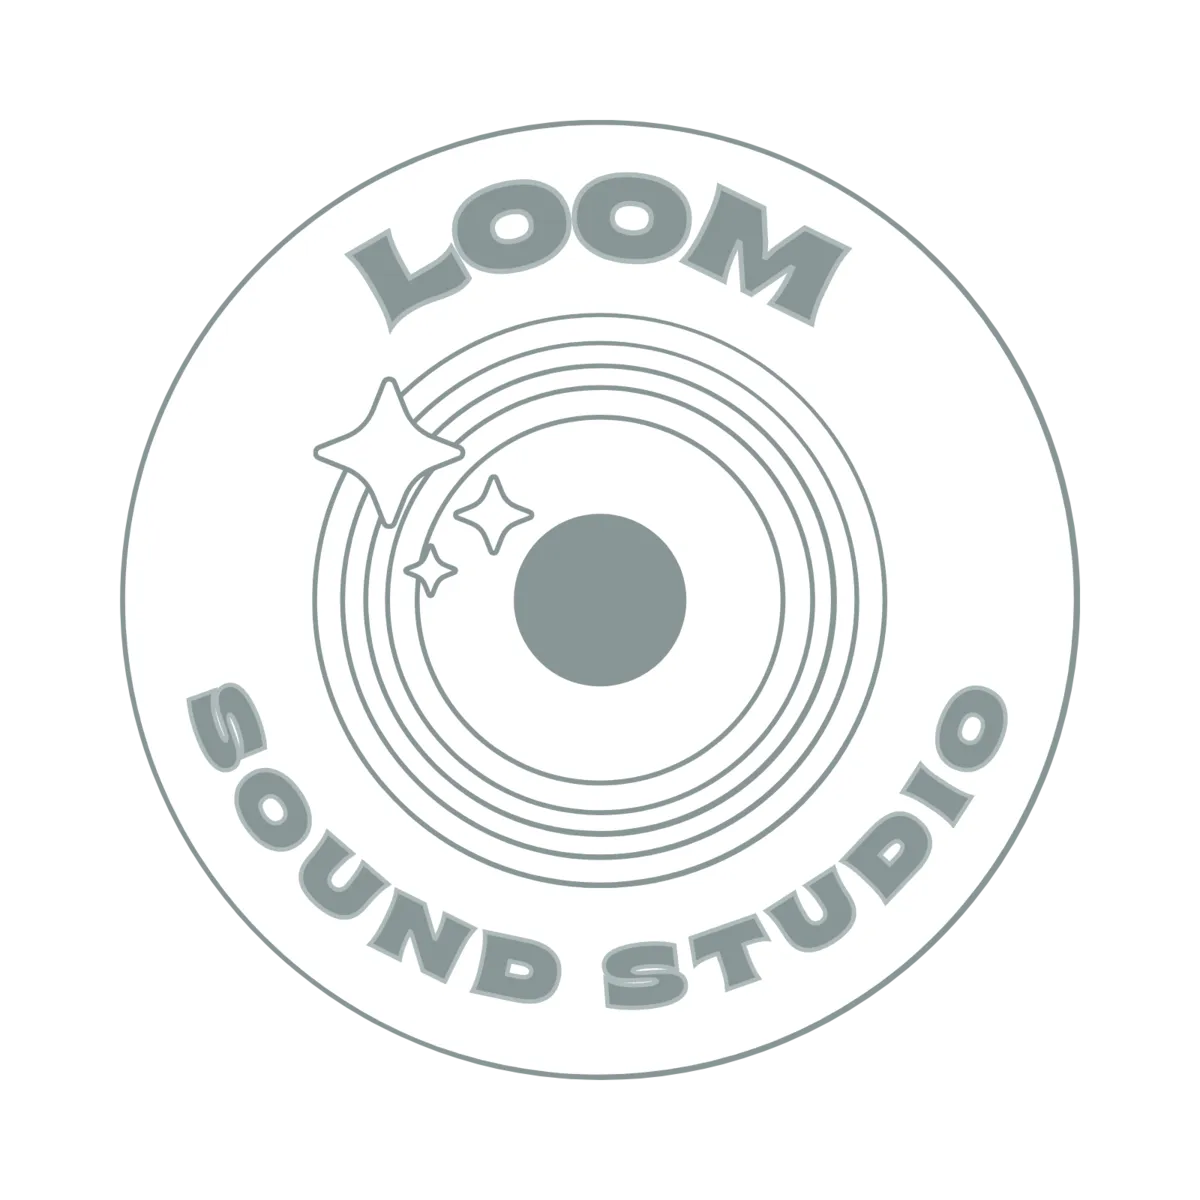 Loom Sound Studio